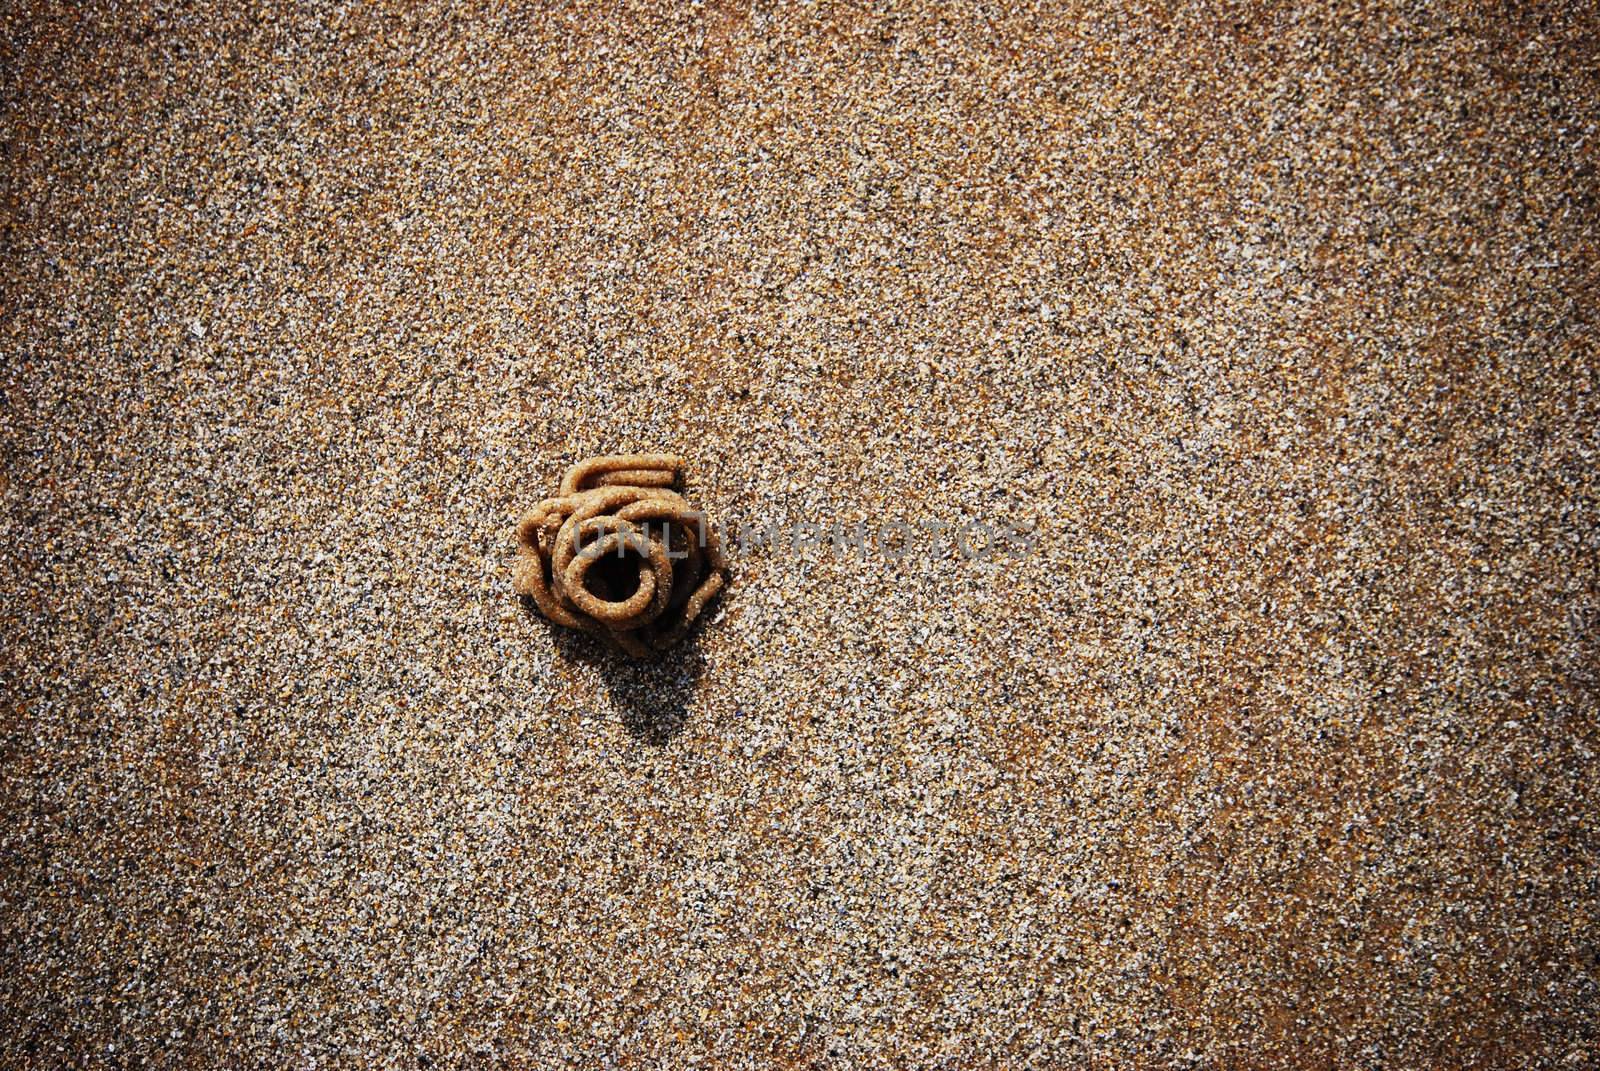 minimal photo of a rock worm on a beach